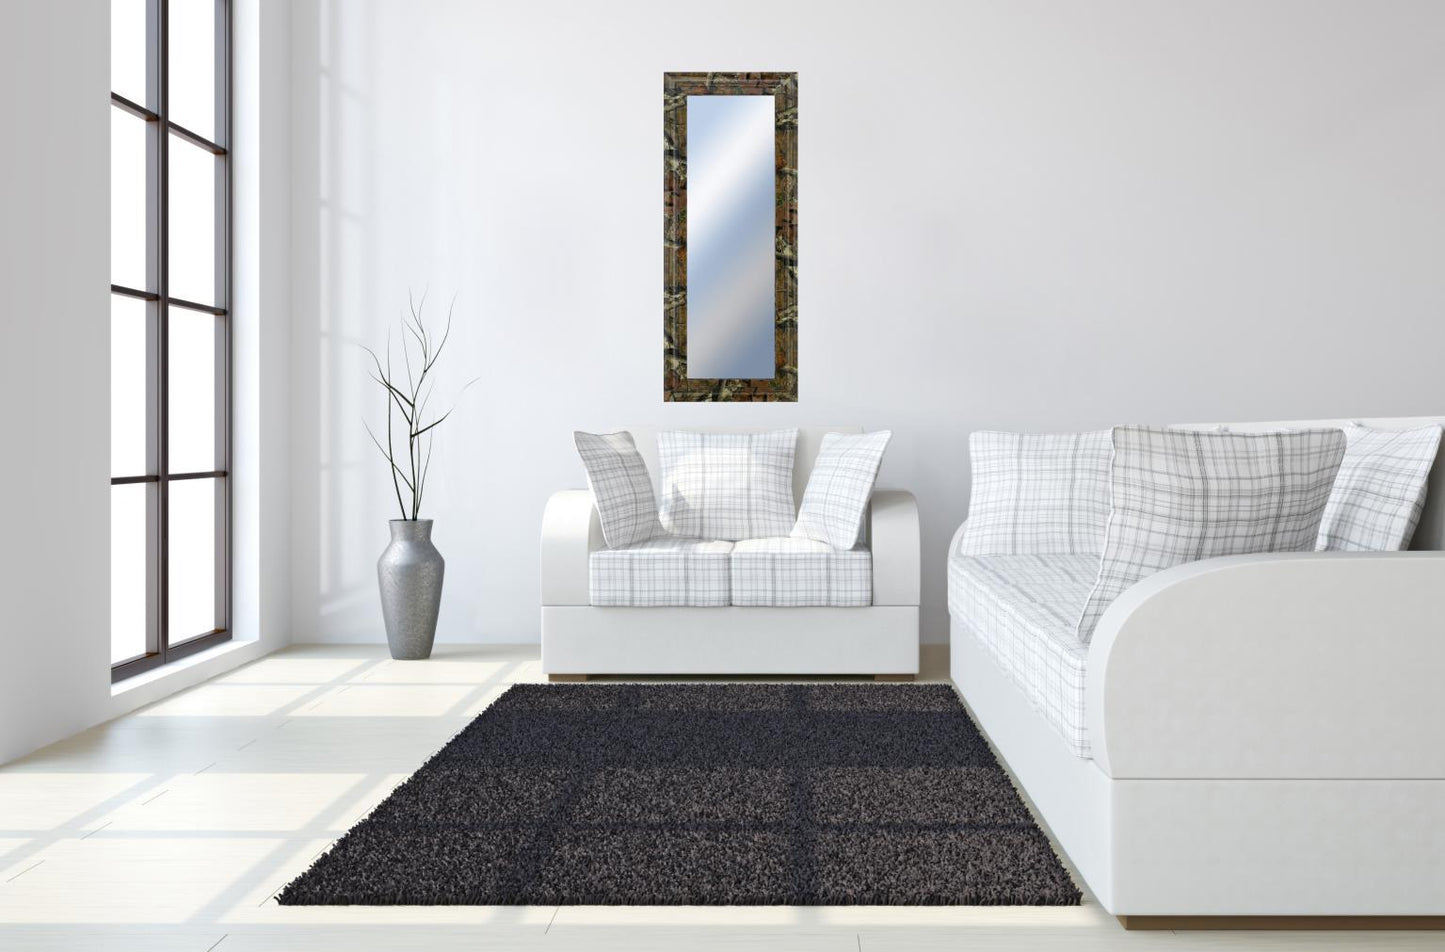 18x42 Decorative Framed Wall Mirror By Classy Art Promotional Mirror Frame #43 - Dark Brown